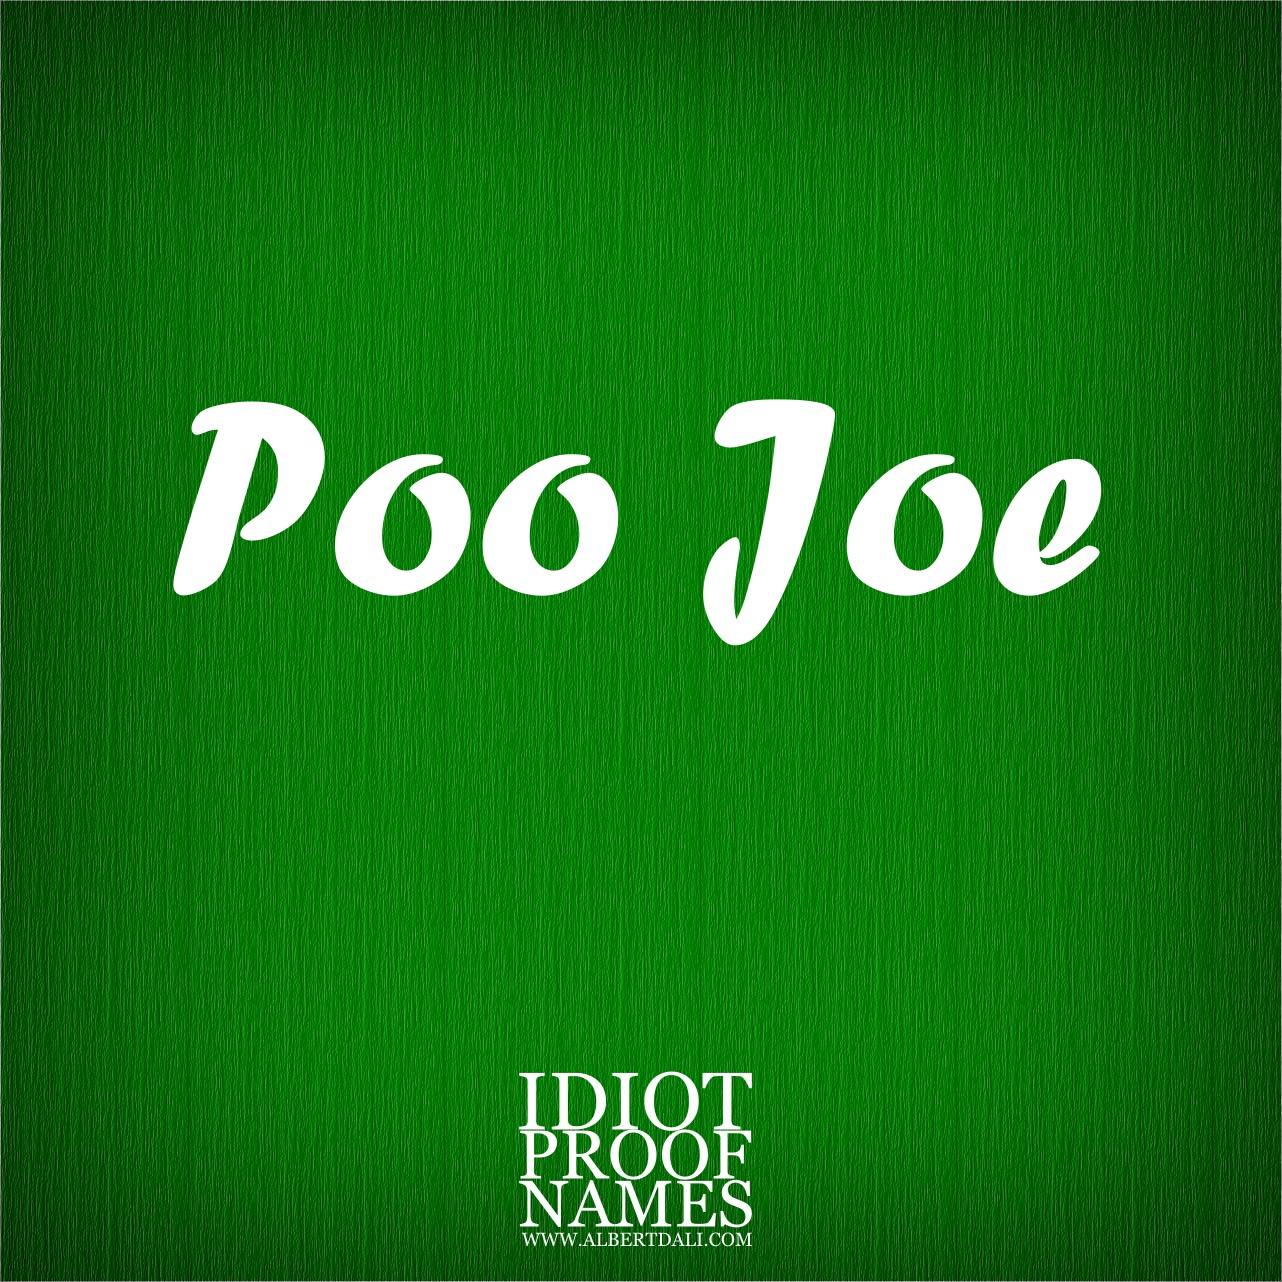 Albert Dali, Poo Joe, Idiot Proof Names, www.AlbertDali.com